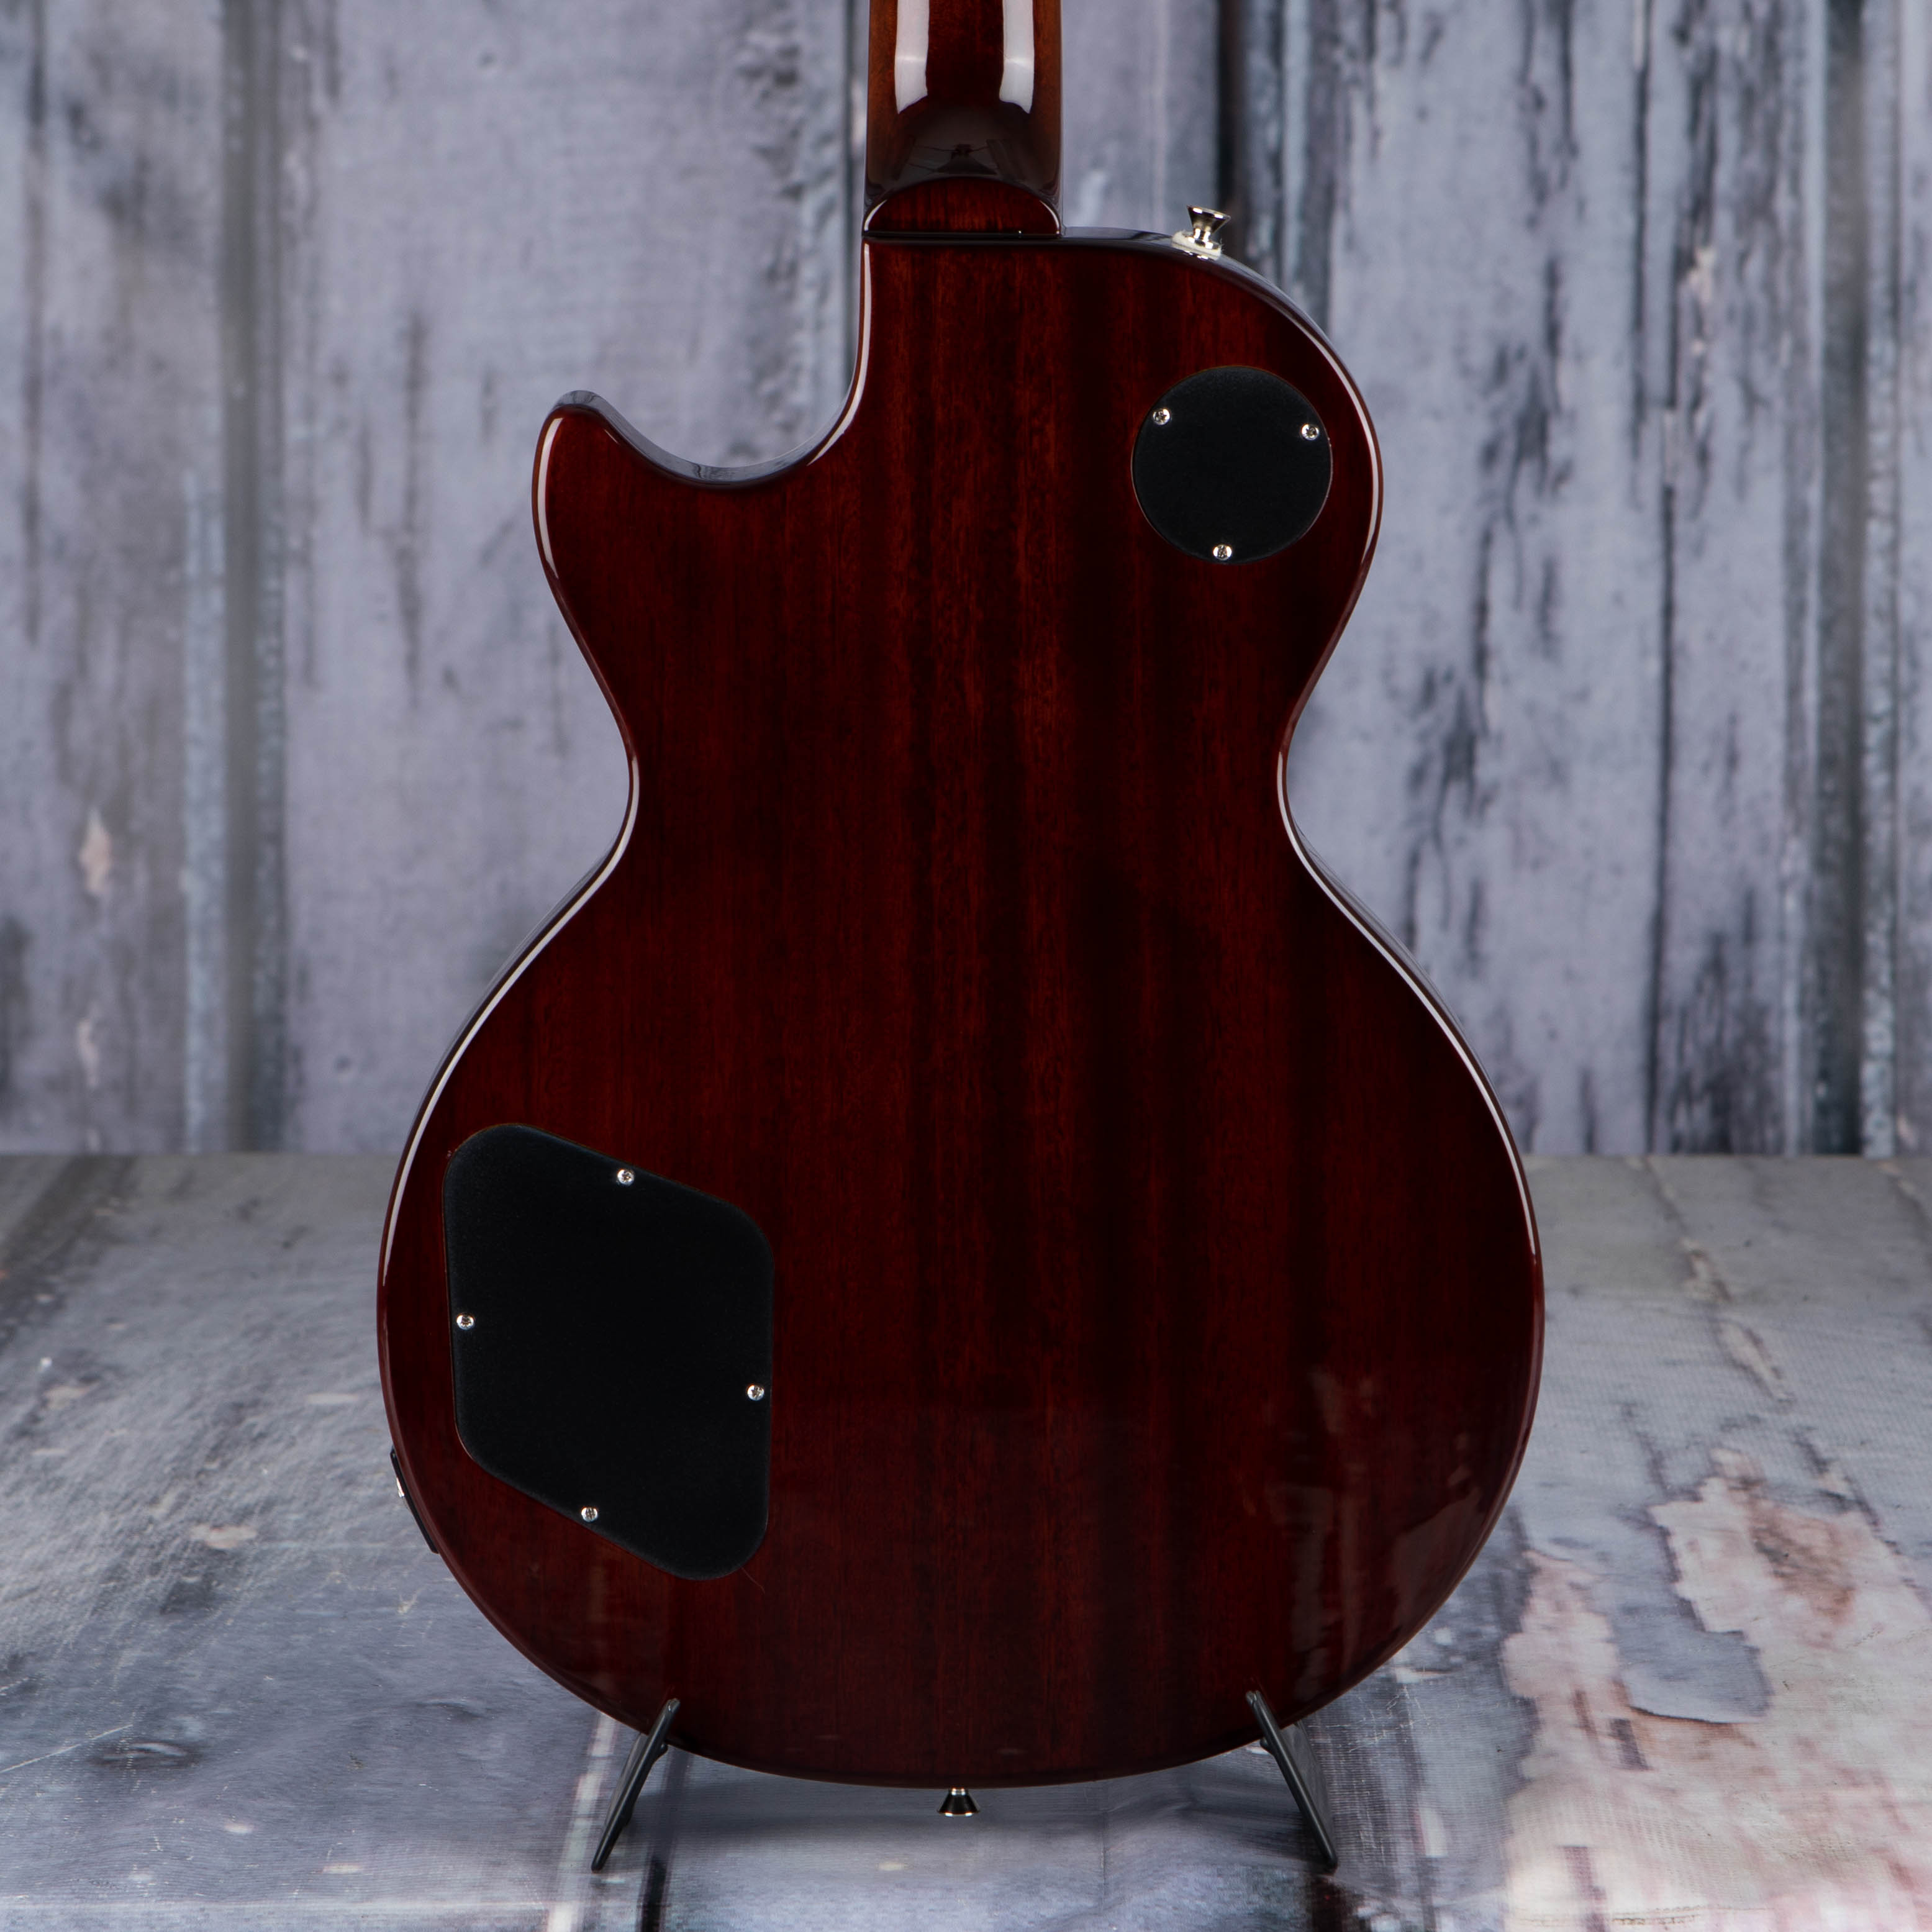 Epiphone Slash Les Paul Standard Electric Guitar, Anaconda Burst, back closeup